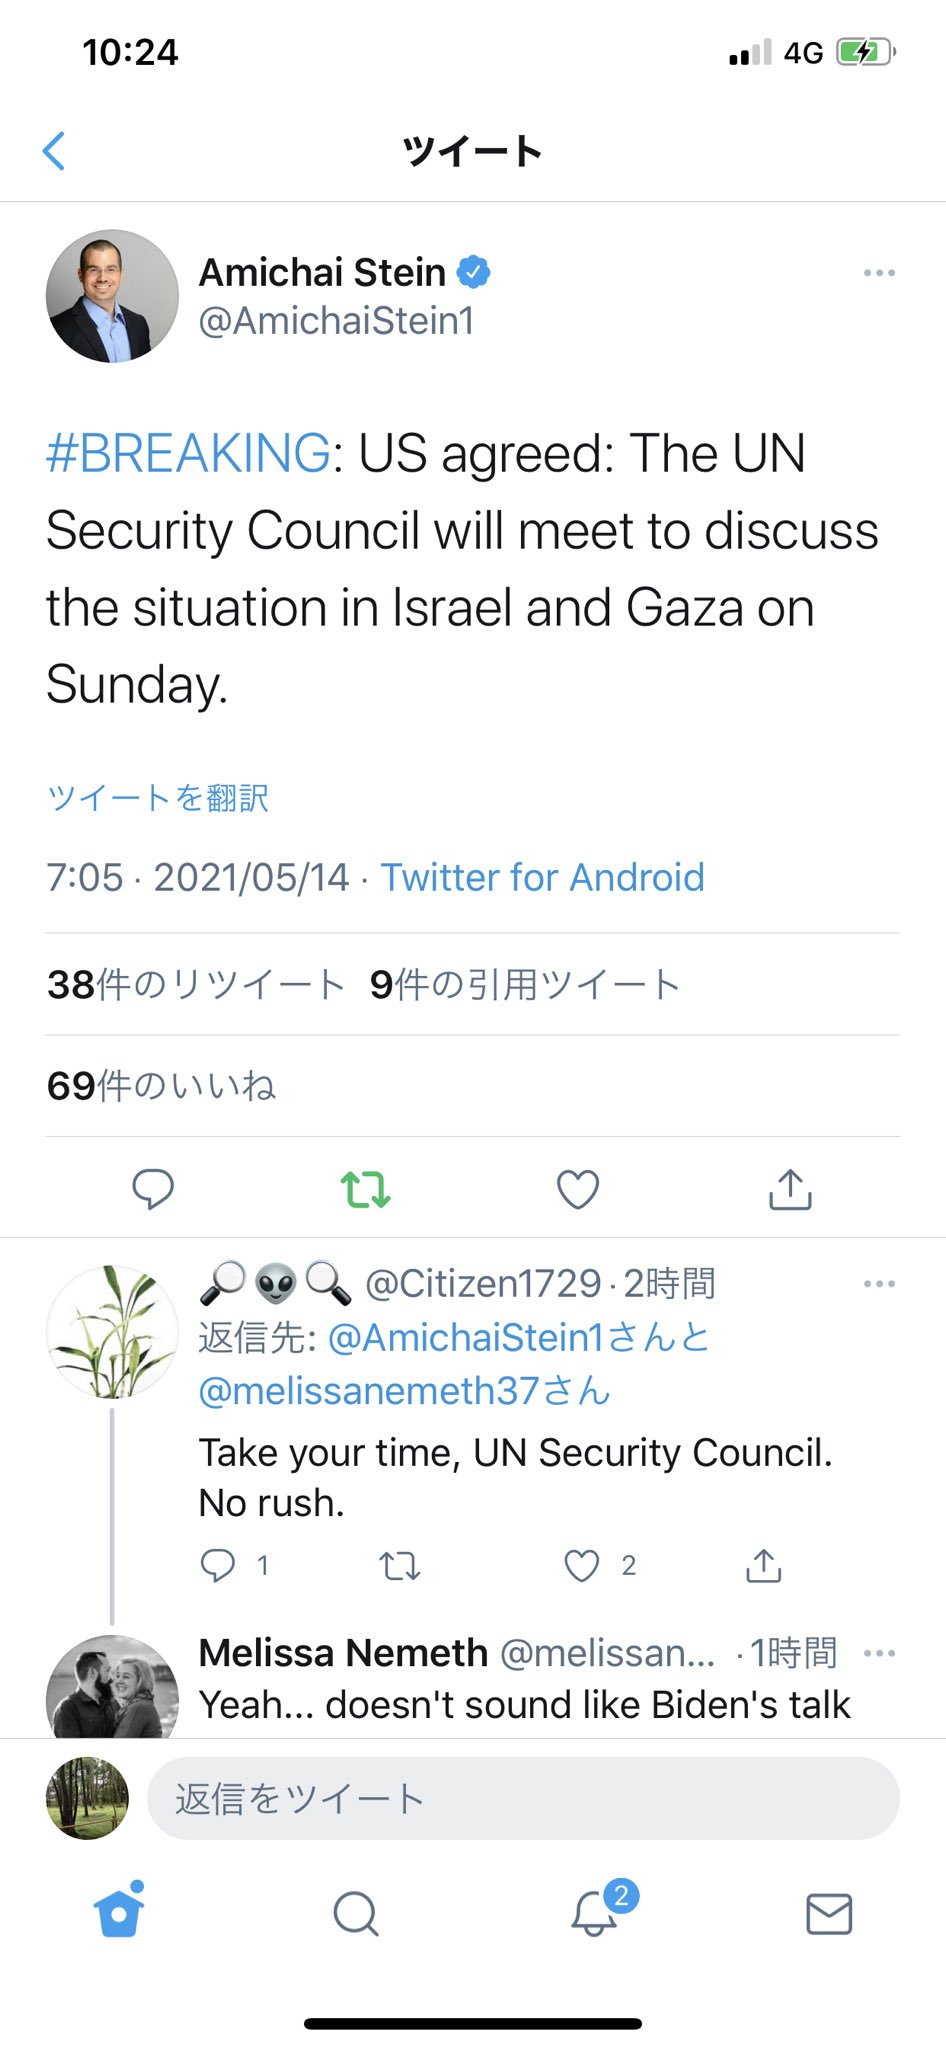 Yoinotsubasa Gaza Palestine Savesheikhjarrah Gazaunderattack Israeliterrorism Palestinianlivesmatter Sanctionsonapartheid Zionists Are Terrorists 国連安保理は日曜日にイスラエルとガザの状況について議論する 遅いわ 今すぐ